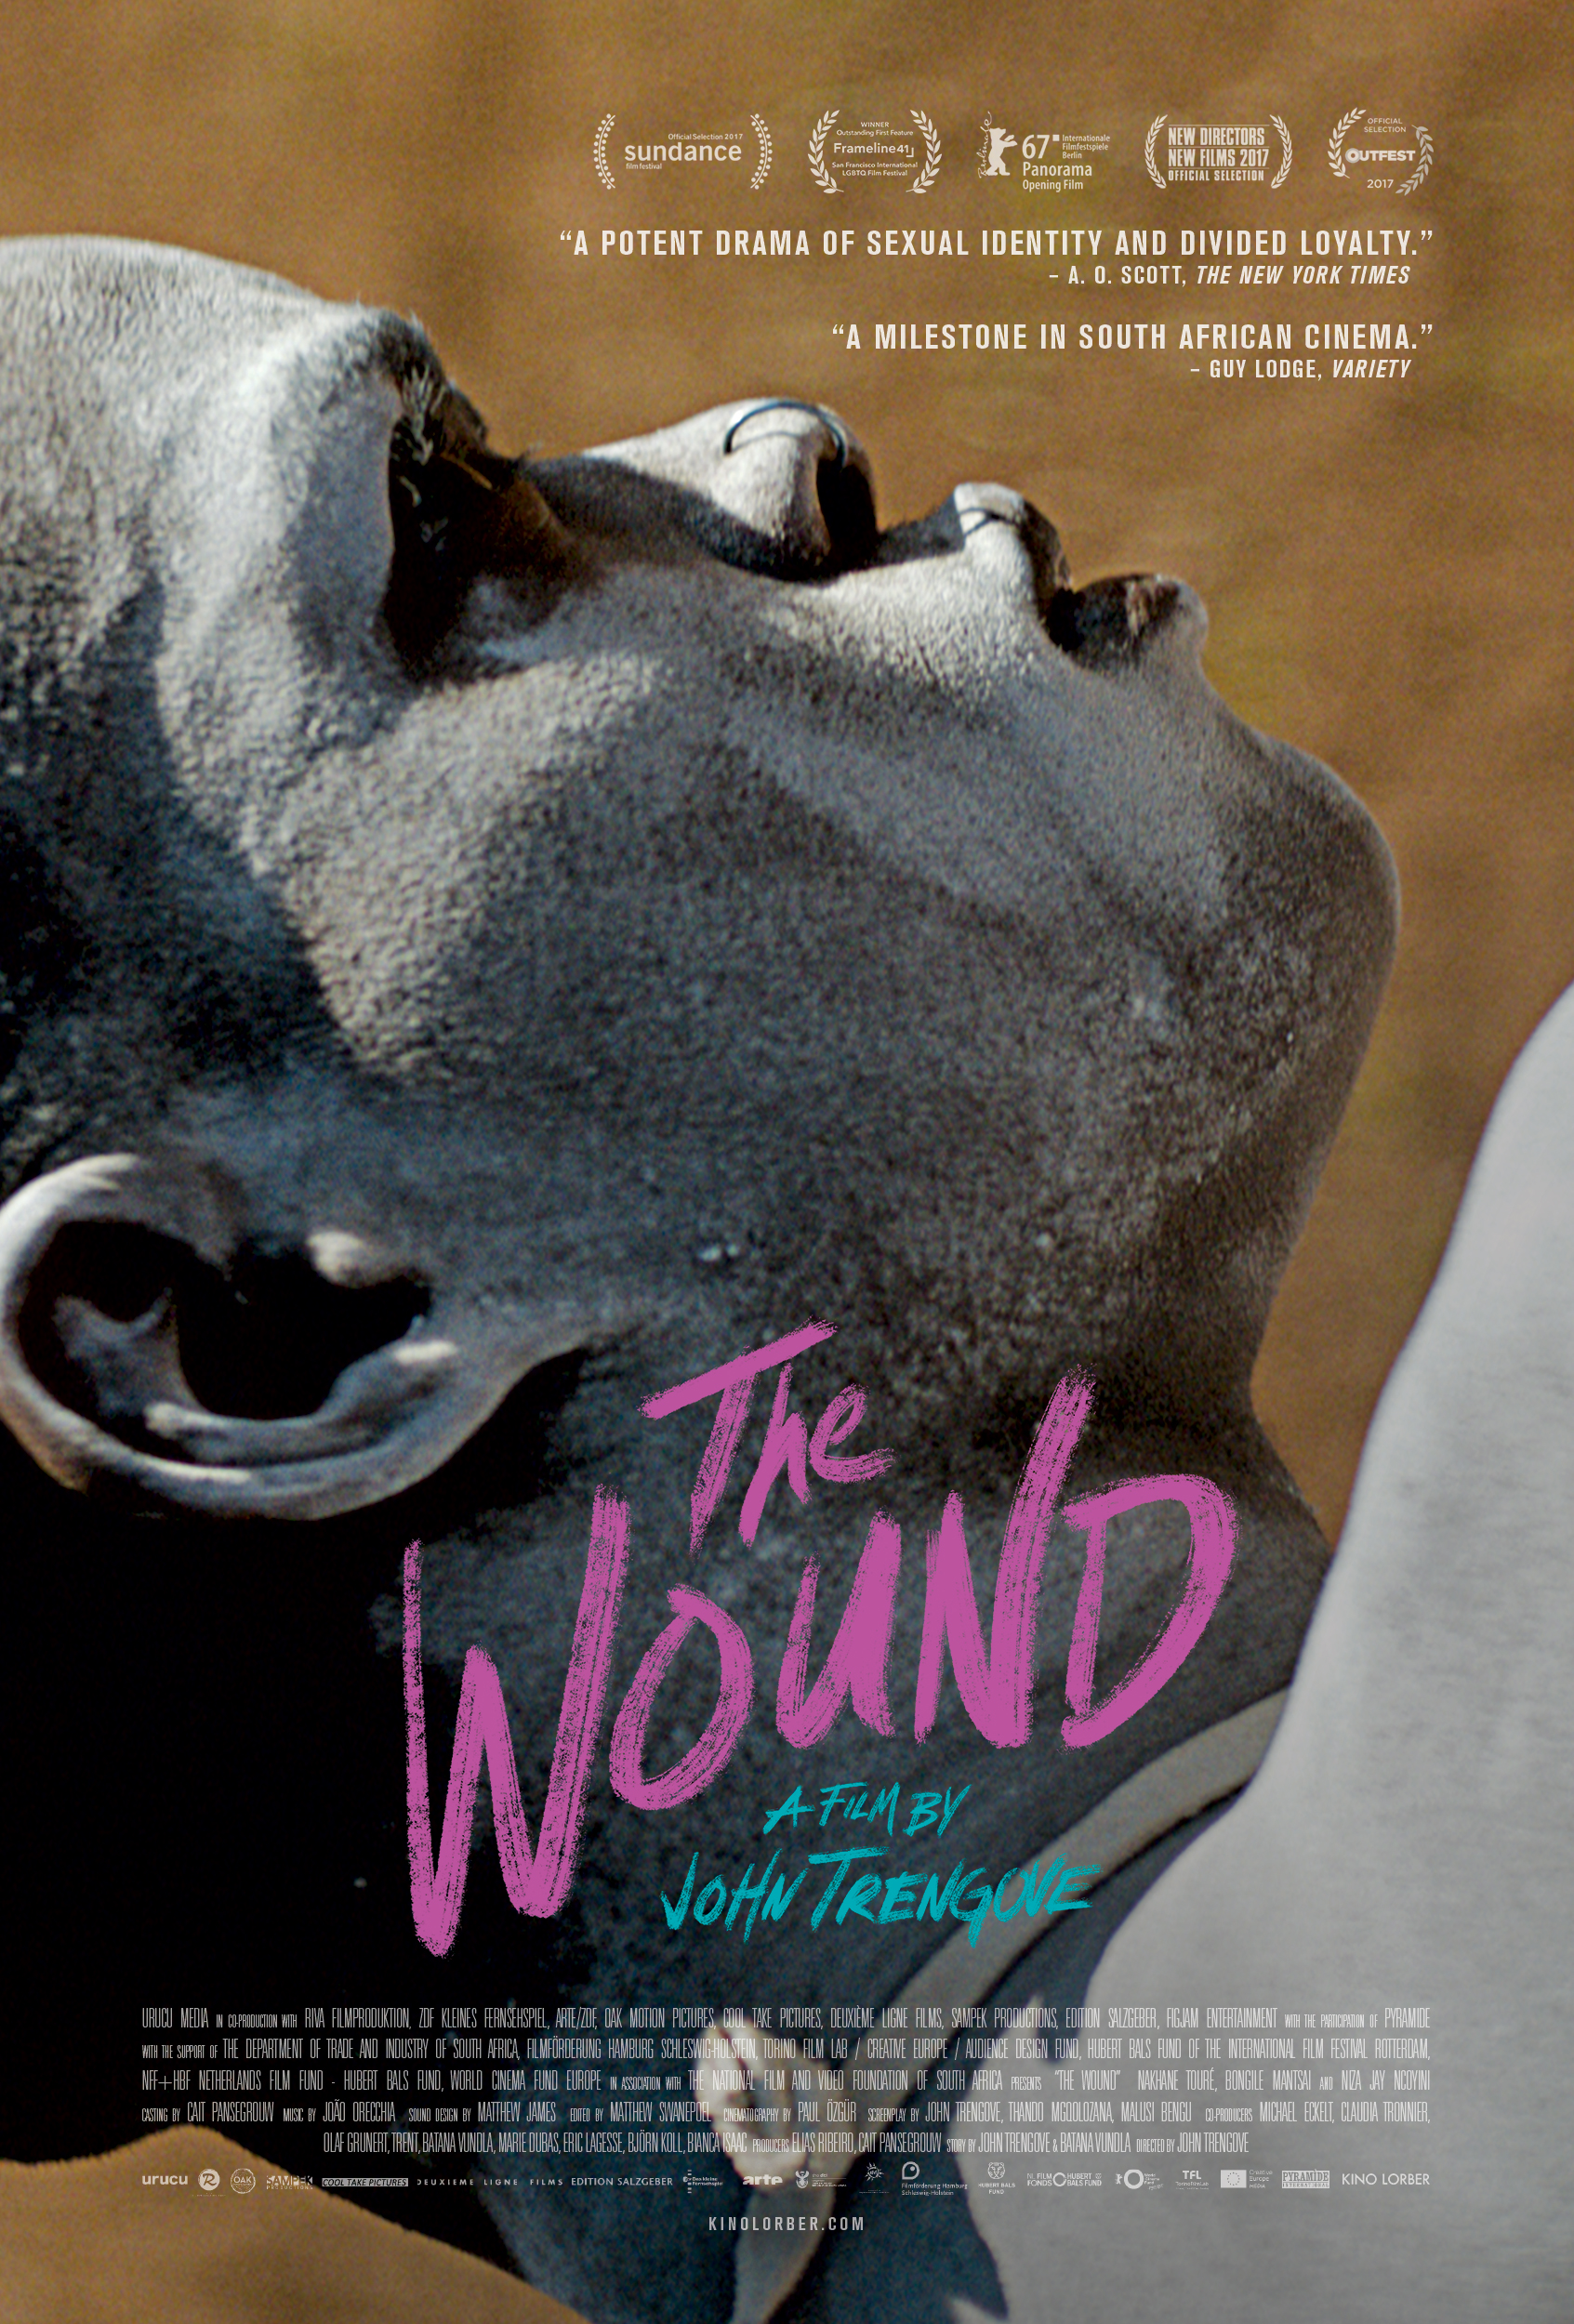 Nonton film The Wound layarkaca21 indoxx1 ganool online streaming terbaru